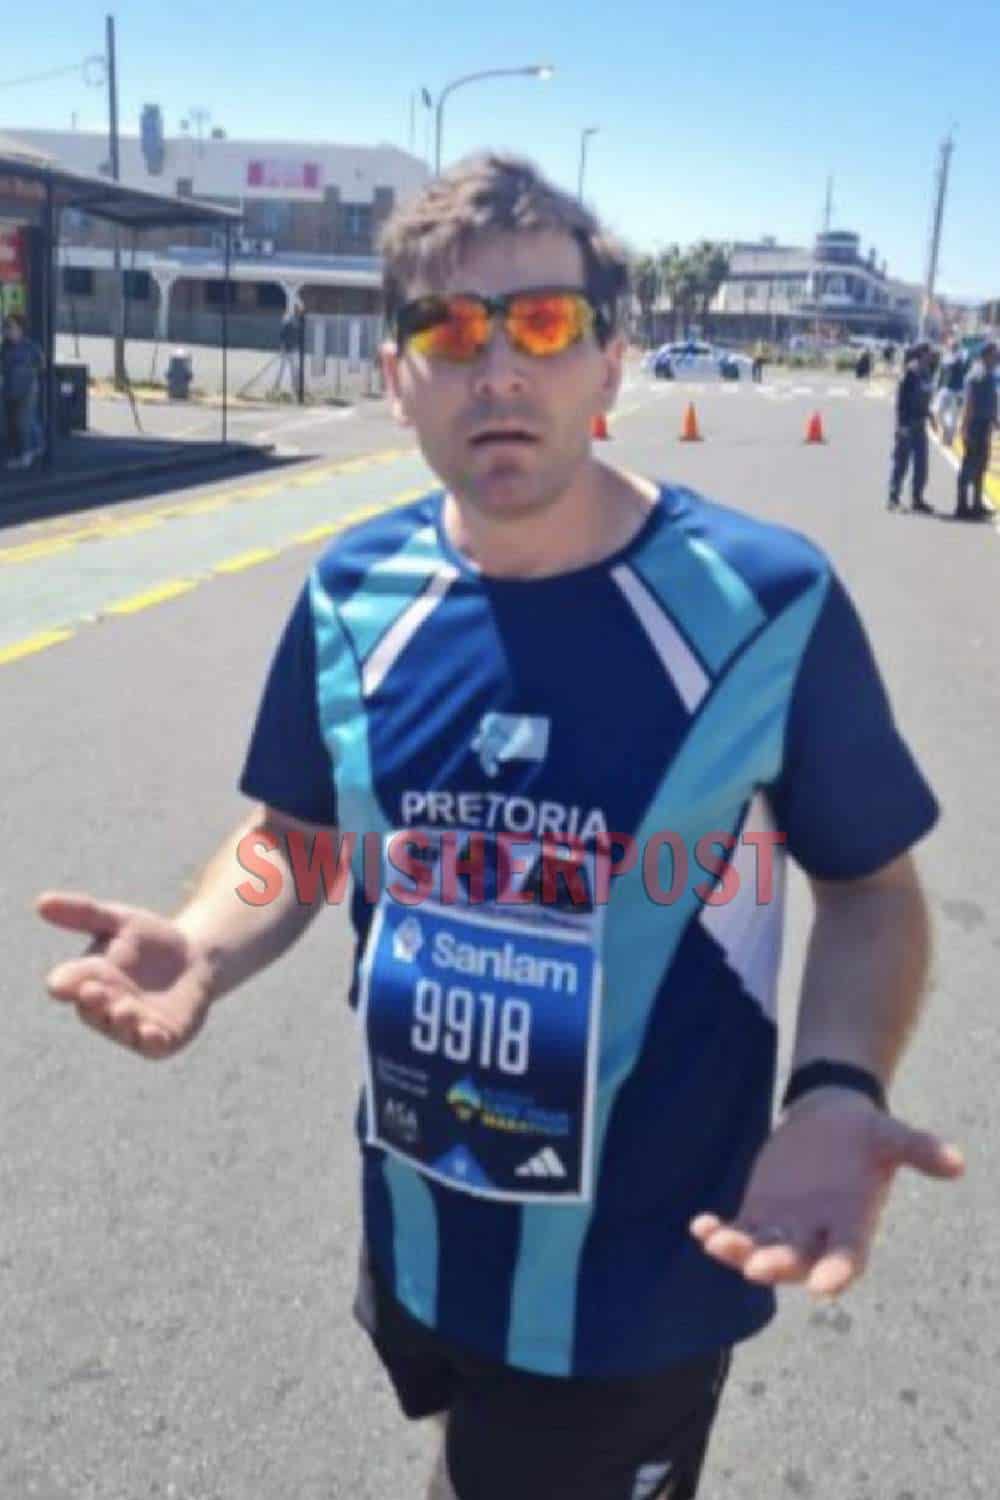 Gerhard van rensburg assault pro-palestine protester Cape Town marathon